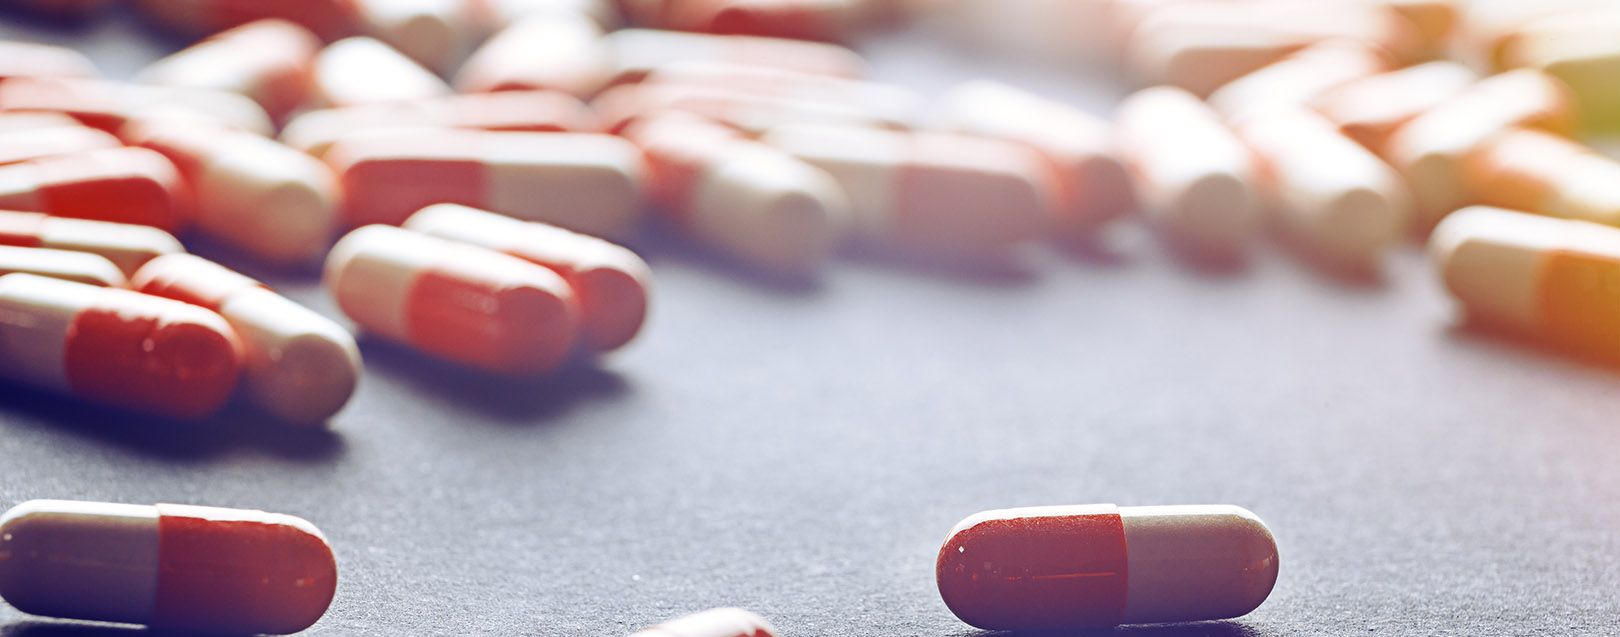 Lupin got FDA approval for Armodafinil Tablets